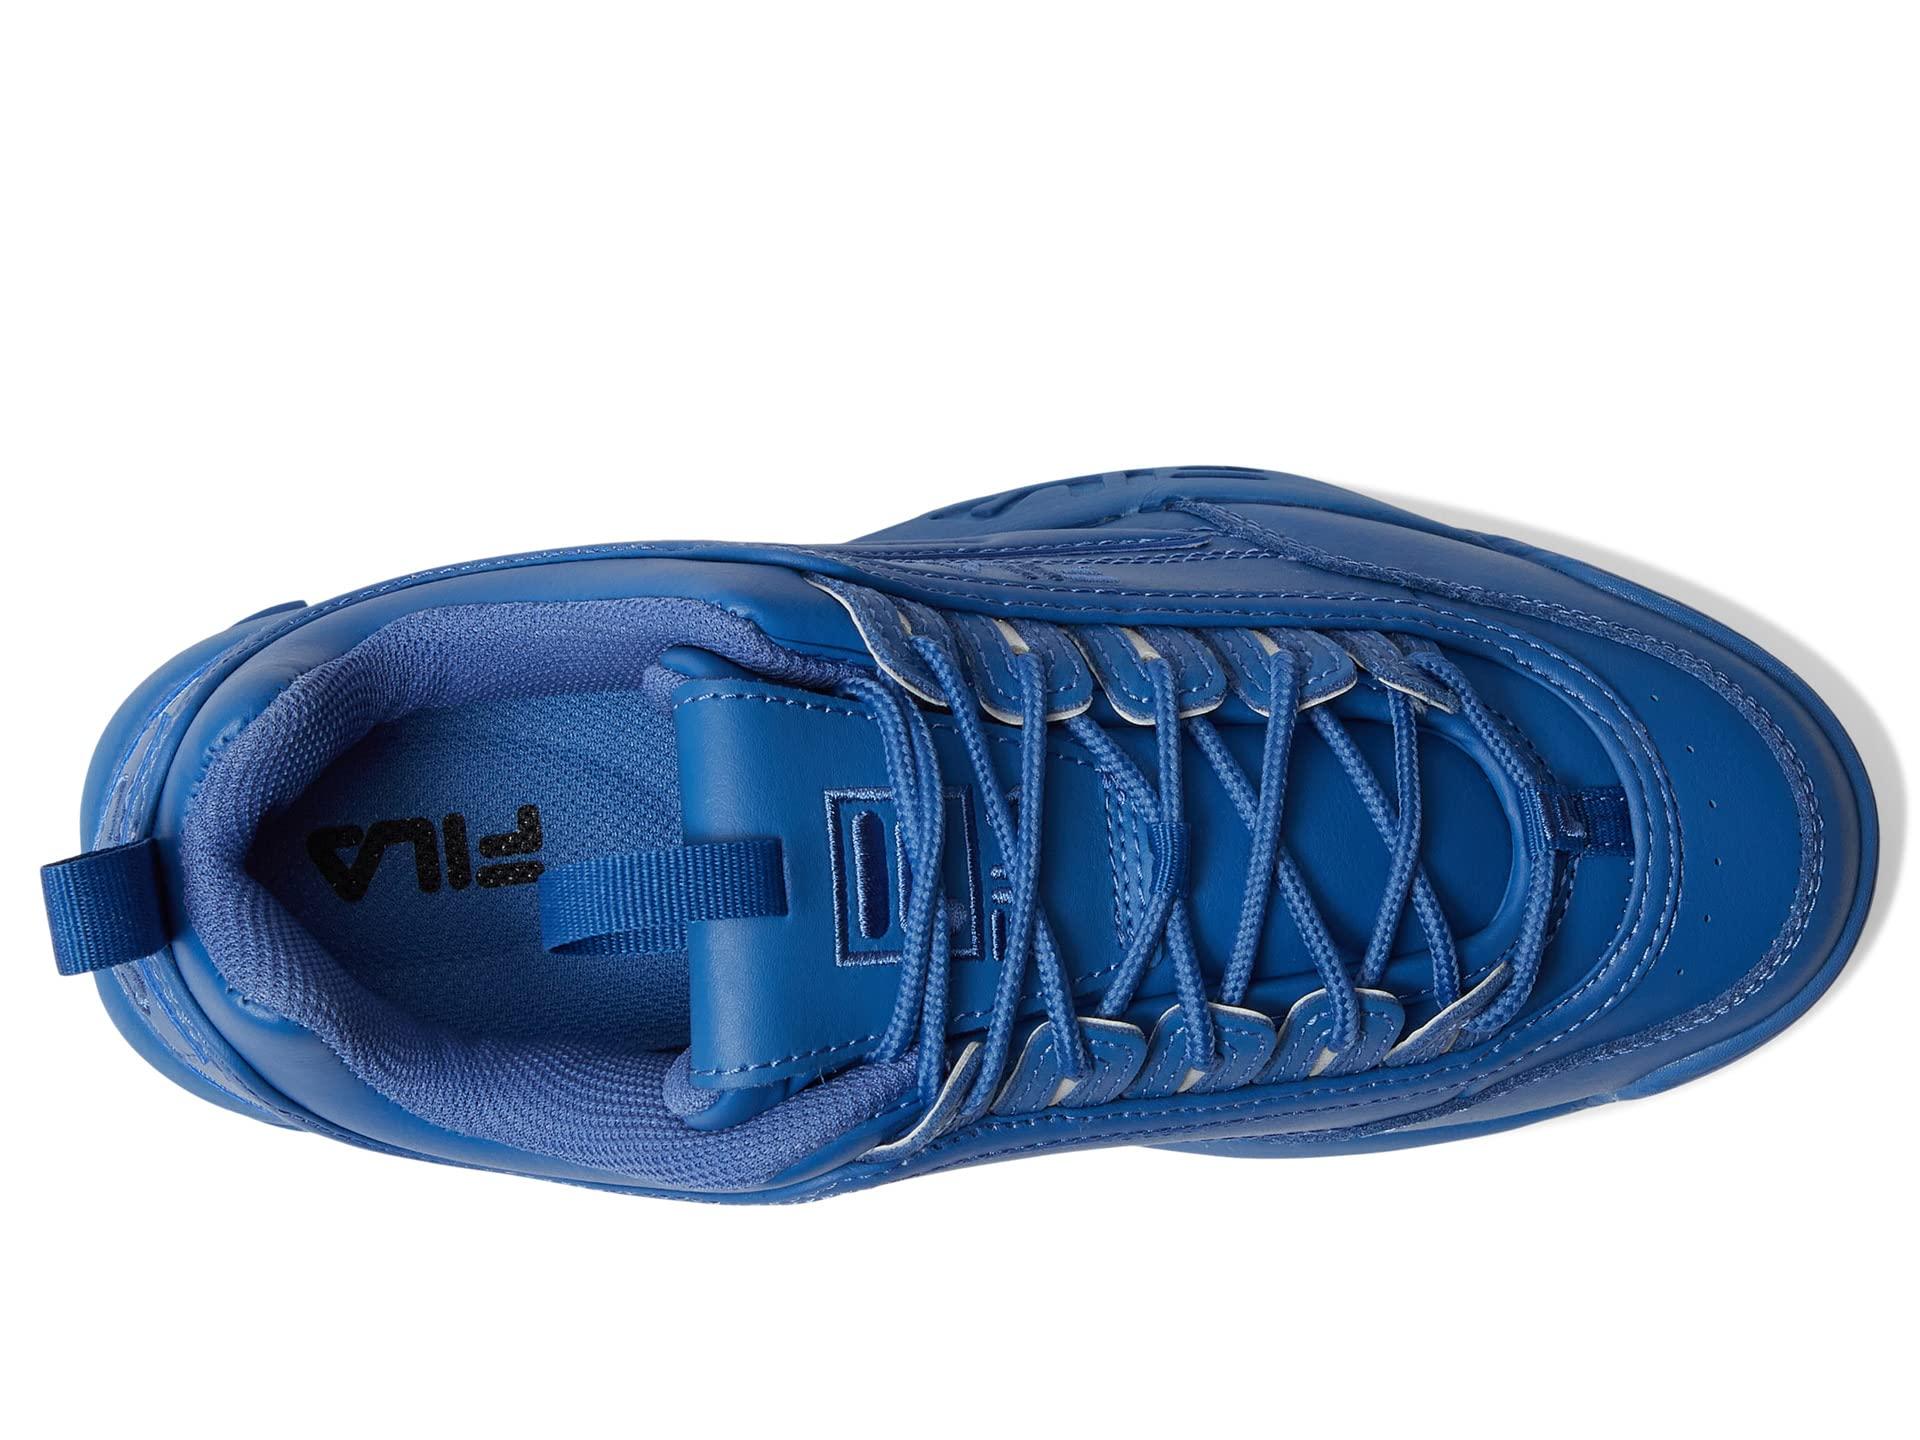 Fila Disruptor Ii Premium Fashion Sneaker in Blue | Lyst